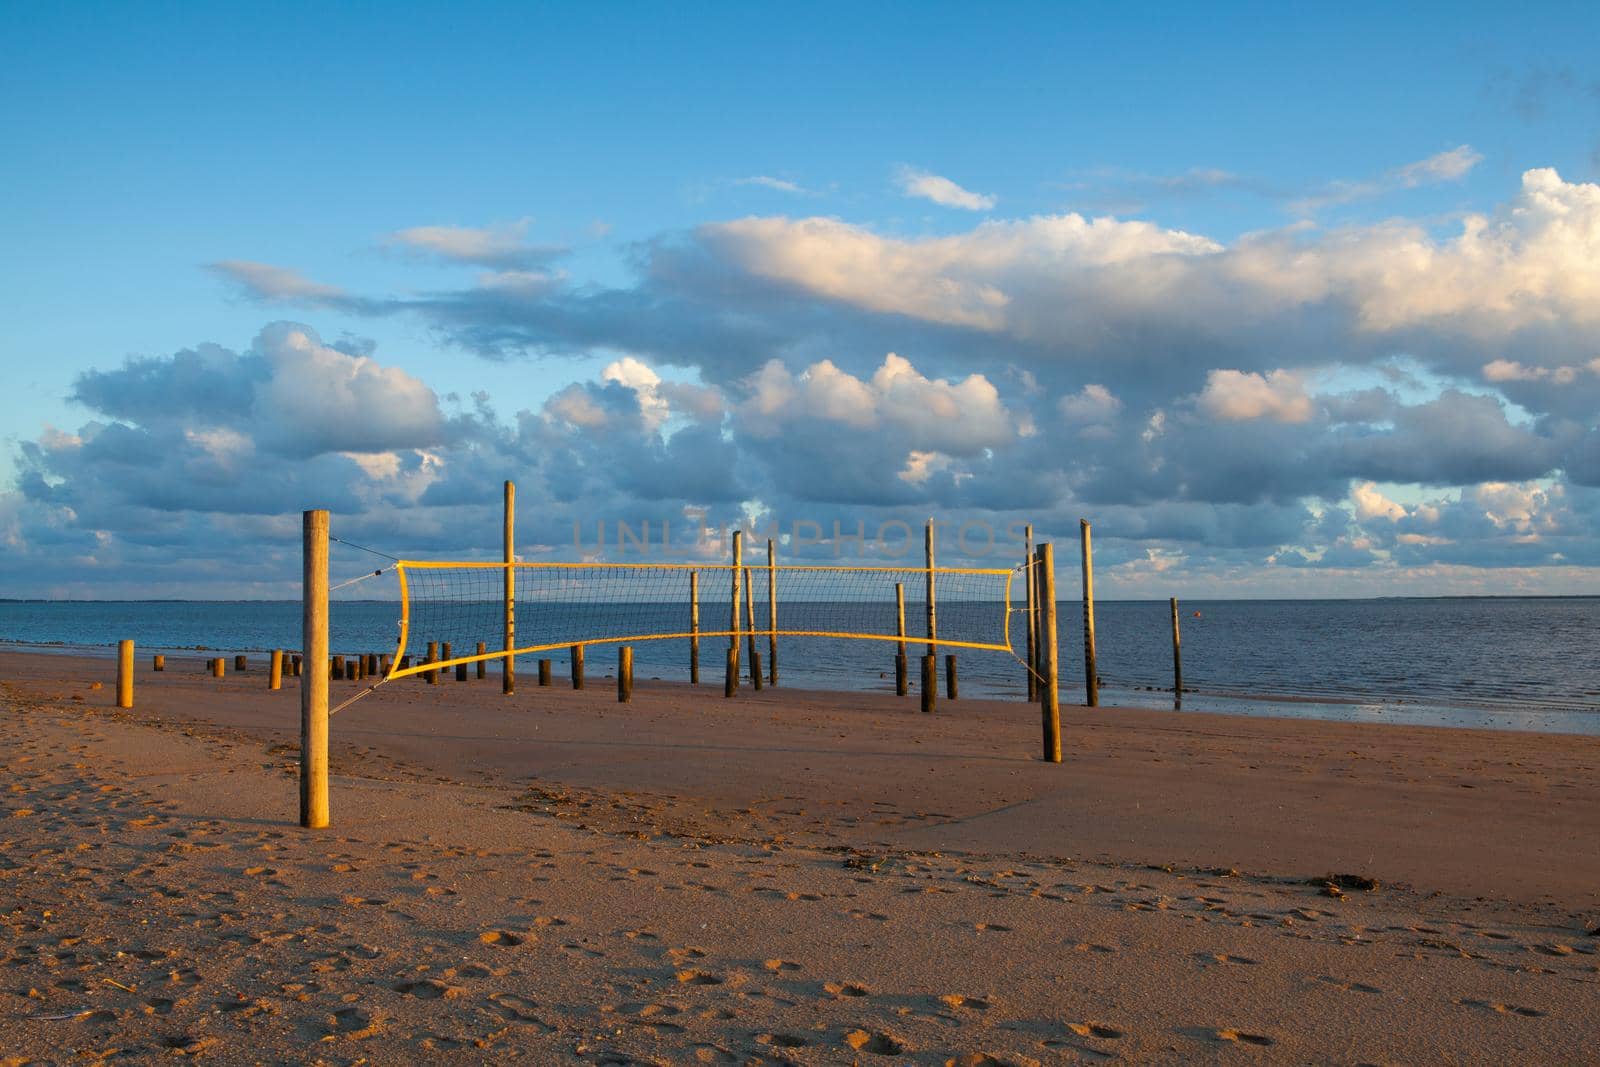 Sunset on the empty beach, Hjerting, Jutland, Denmark by CaptureLight